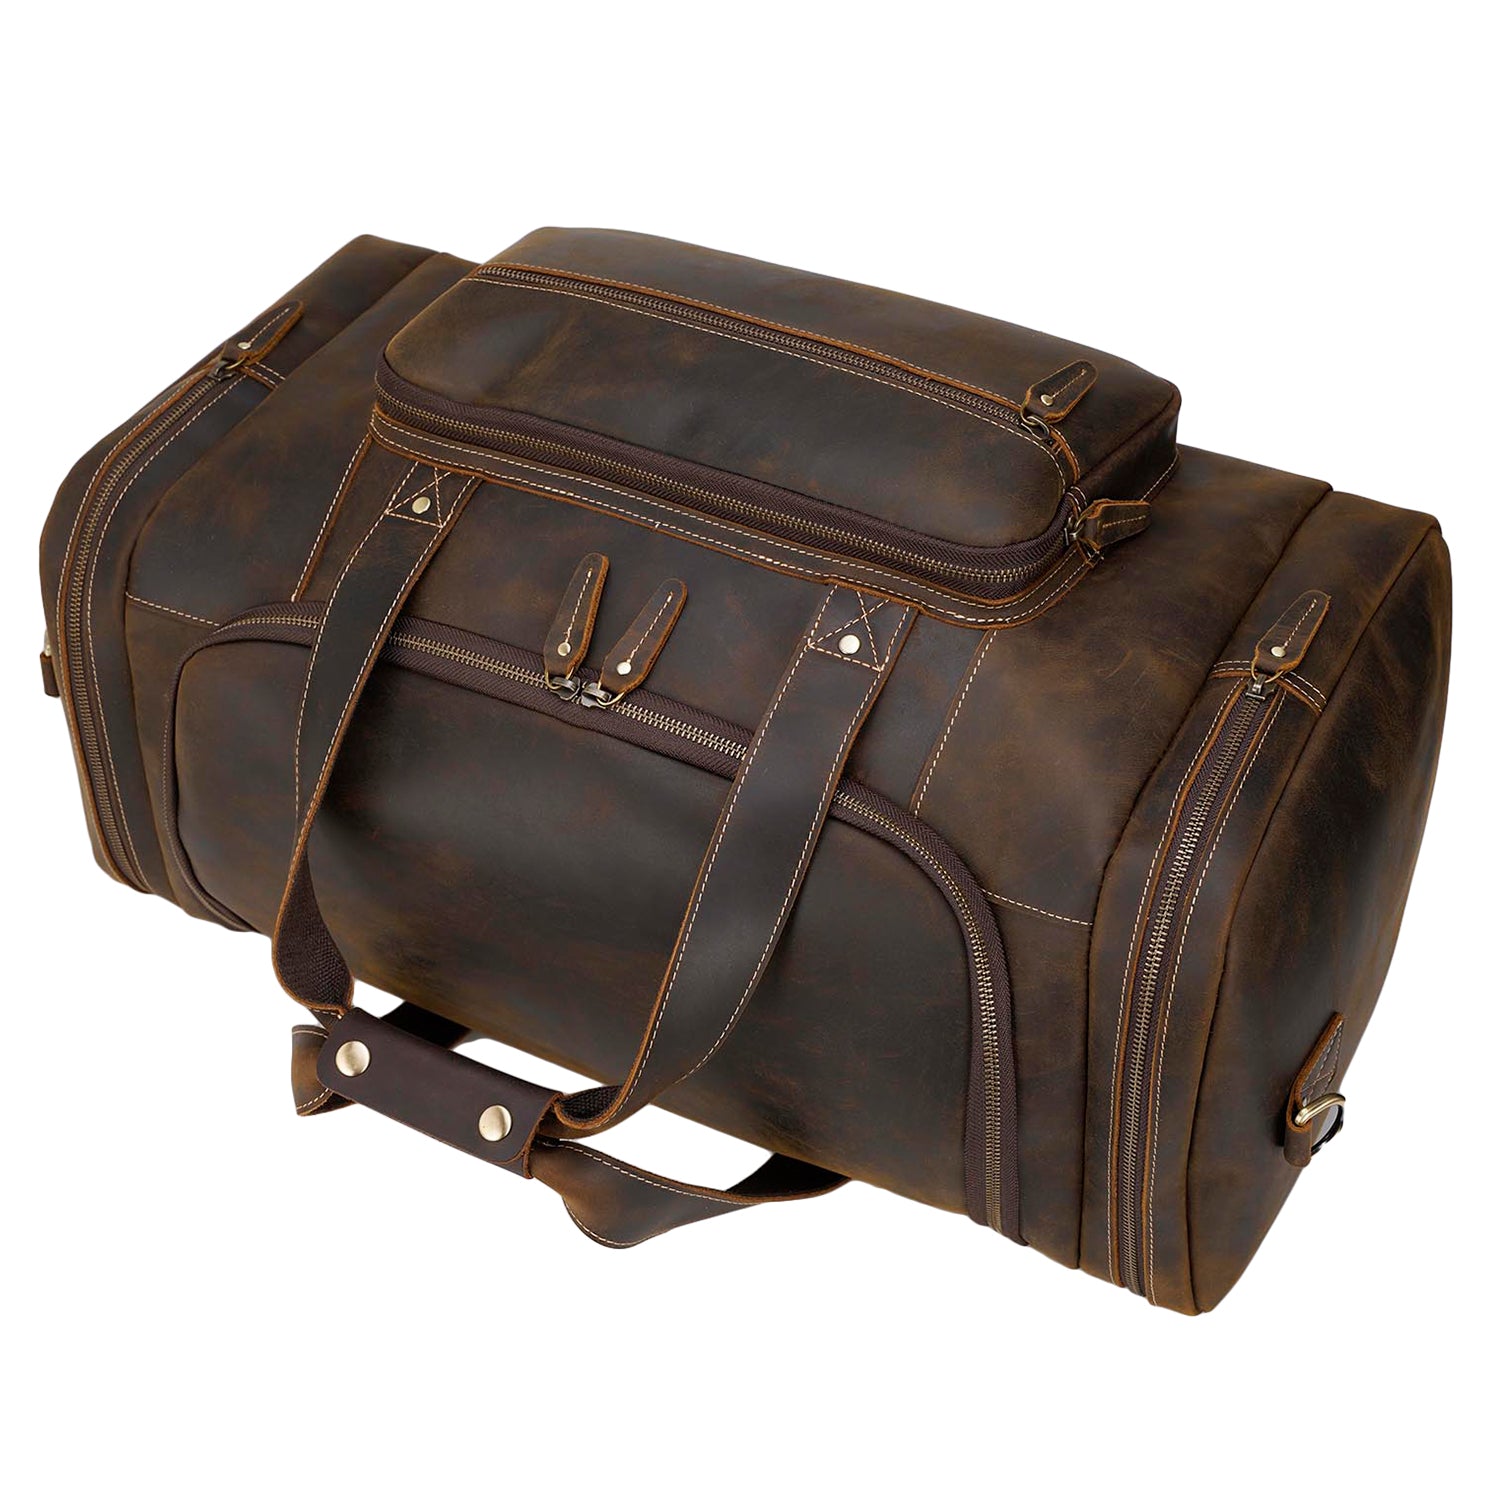 Polare 23" Full Grain Leather Gym Weekender Luggage Bag (Brown,Top)